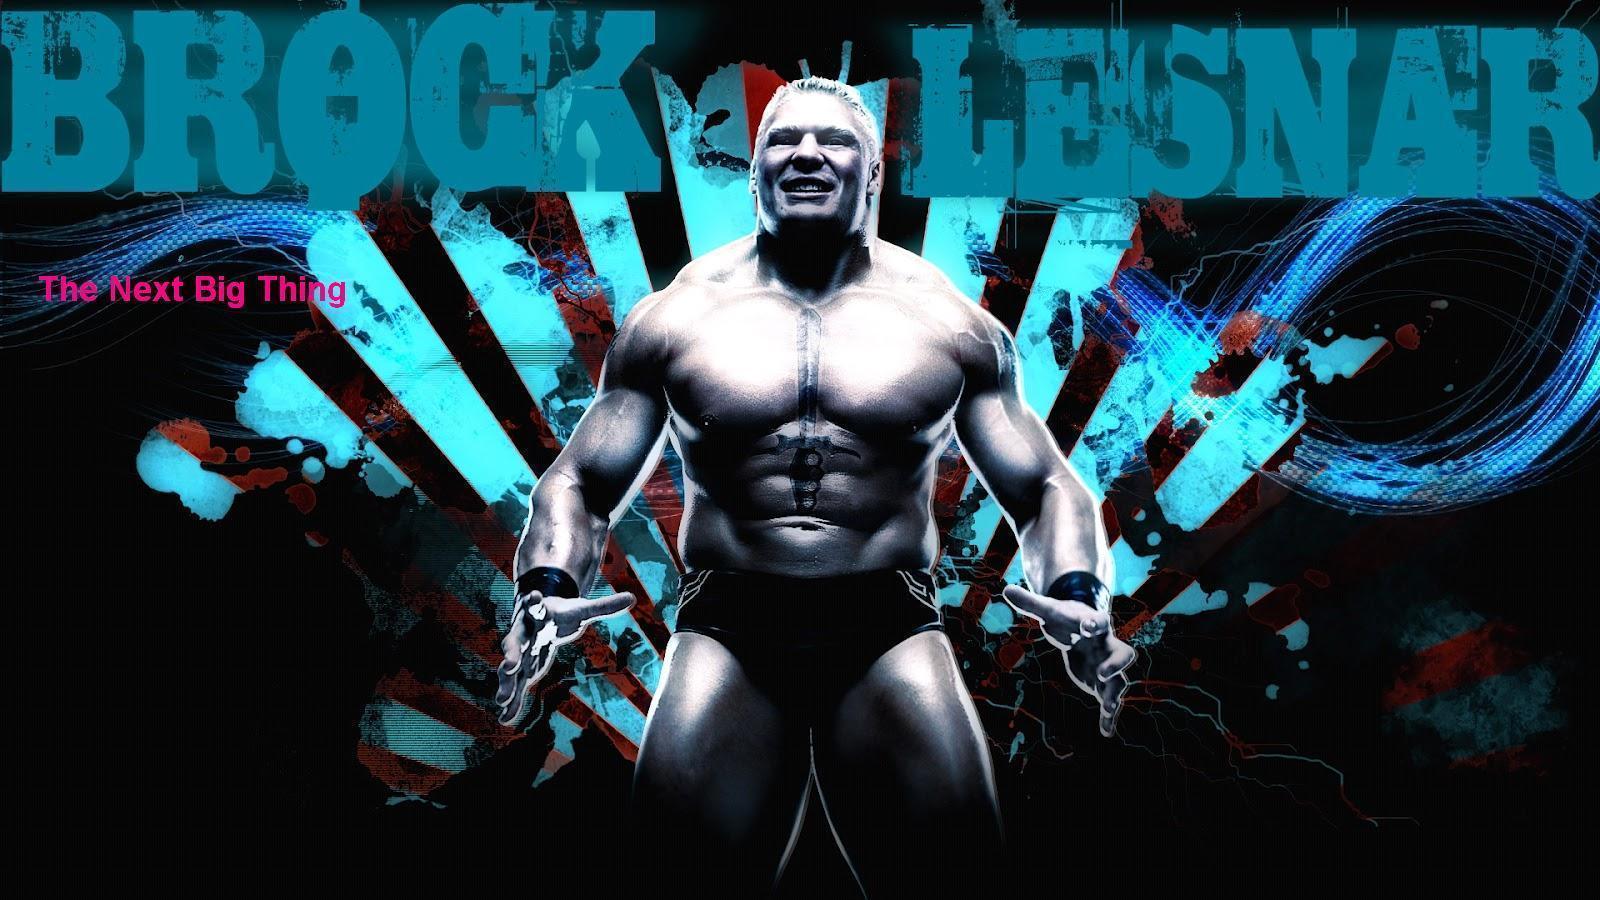 WWE Brock Lesnar Hd Wallpapers 2012 Updated